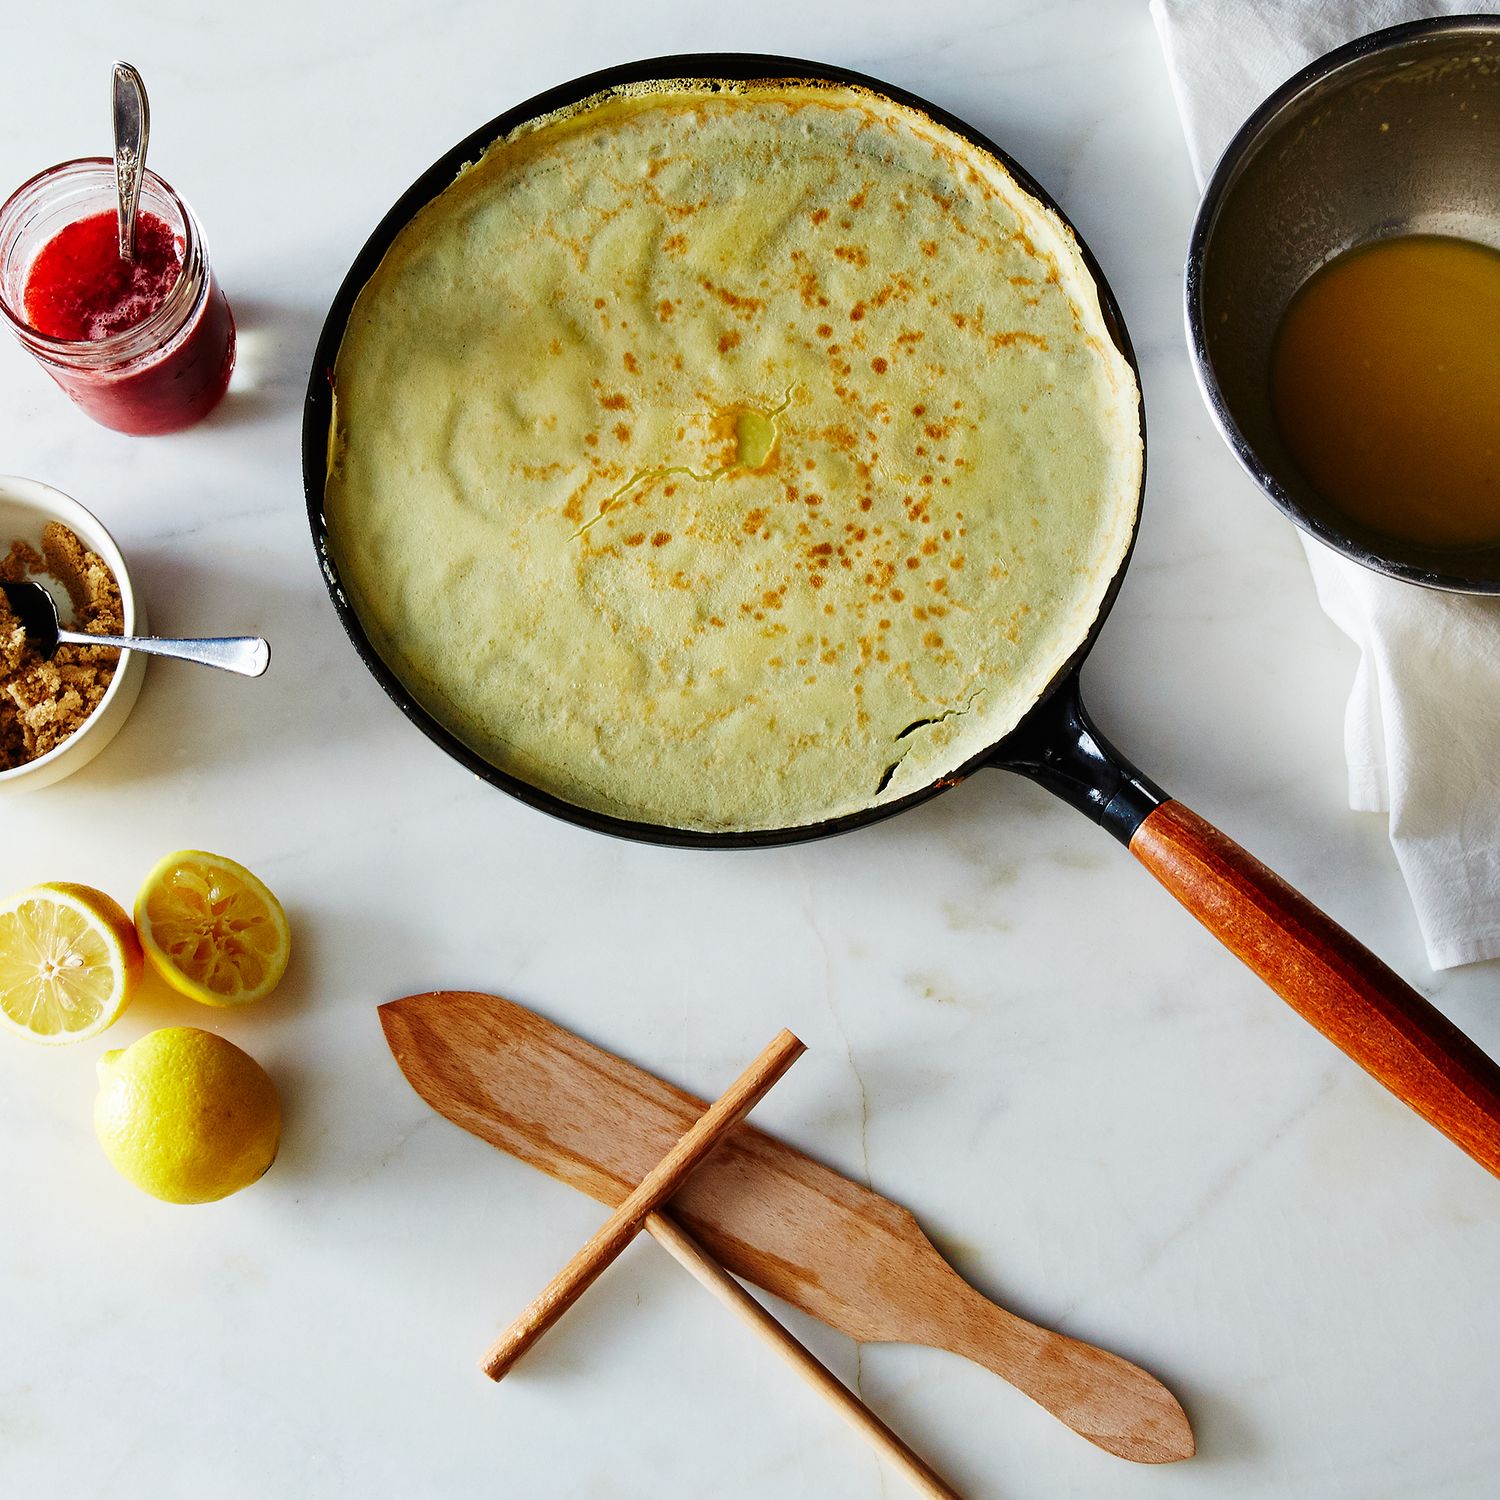 Cast iron pancake pan